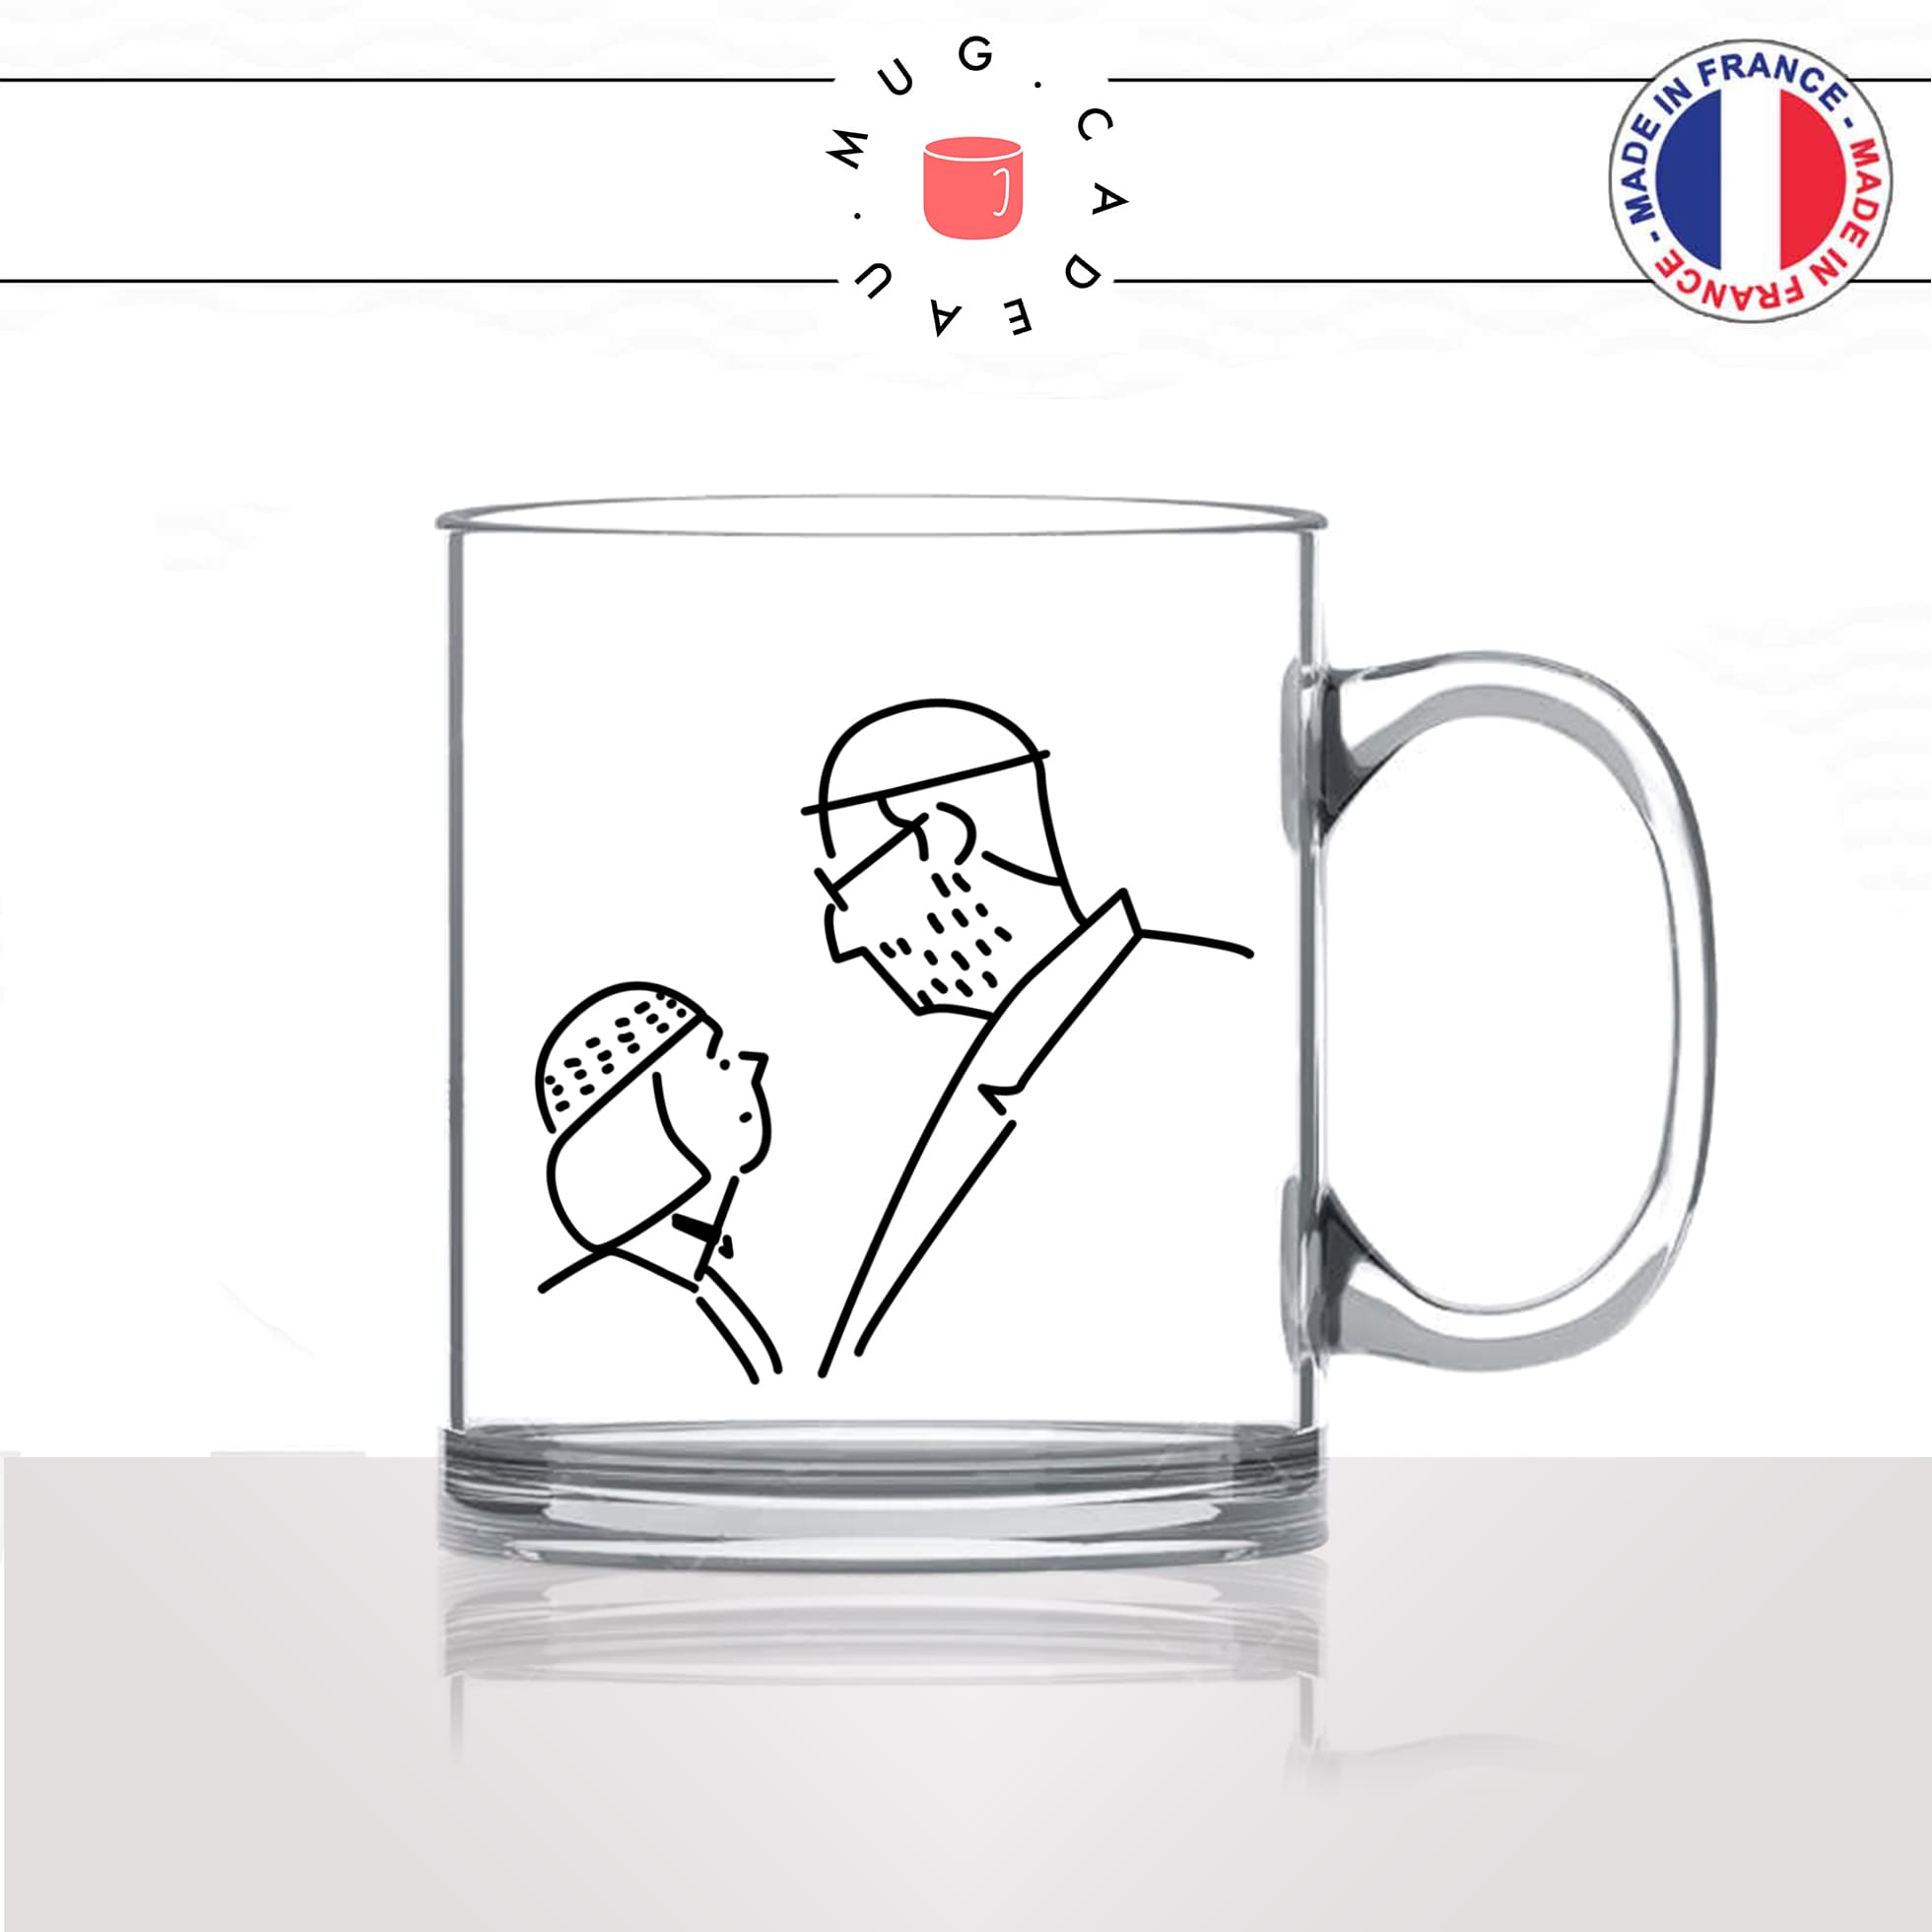 mug-tasse-en-verre-transparent-glass-film-francais-leon-jean-renaud-culte-france-dessin-fancinema-idée-cadeau-fun-cool-café-thé2